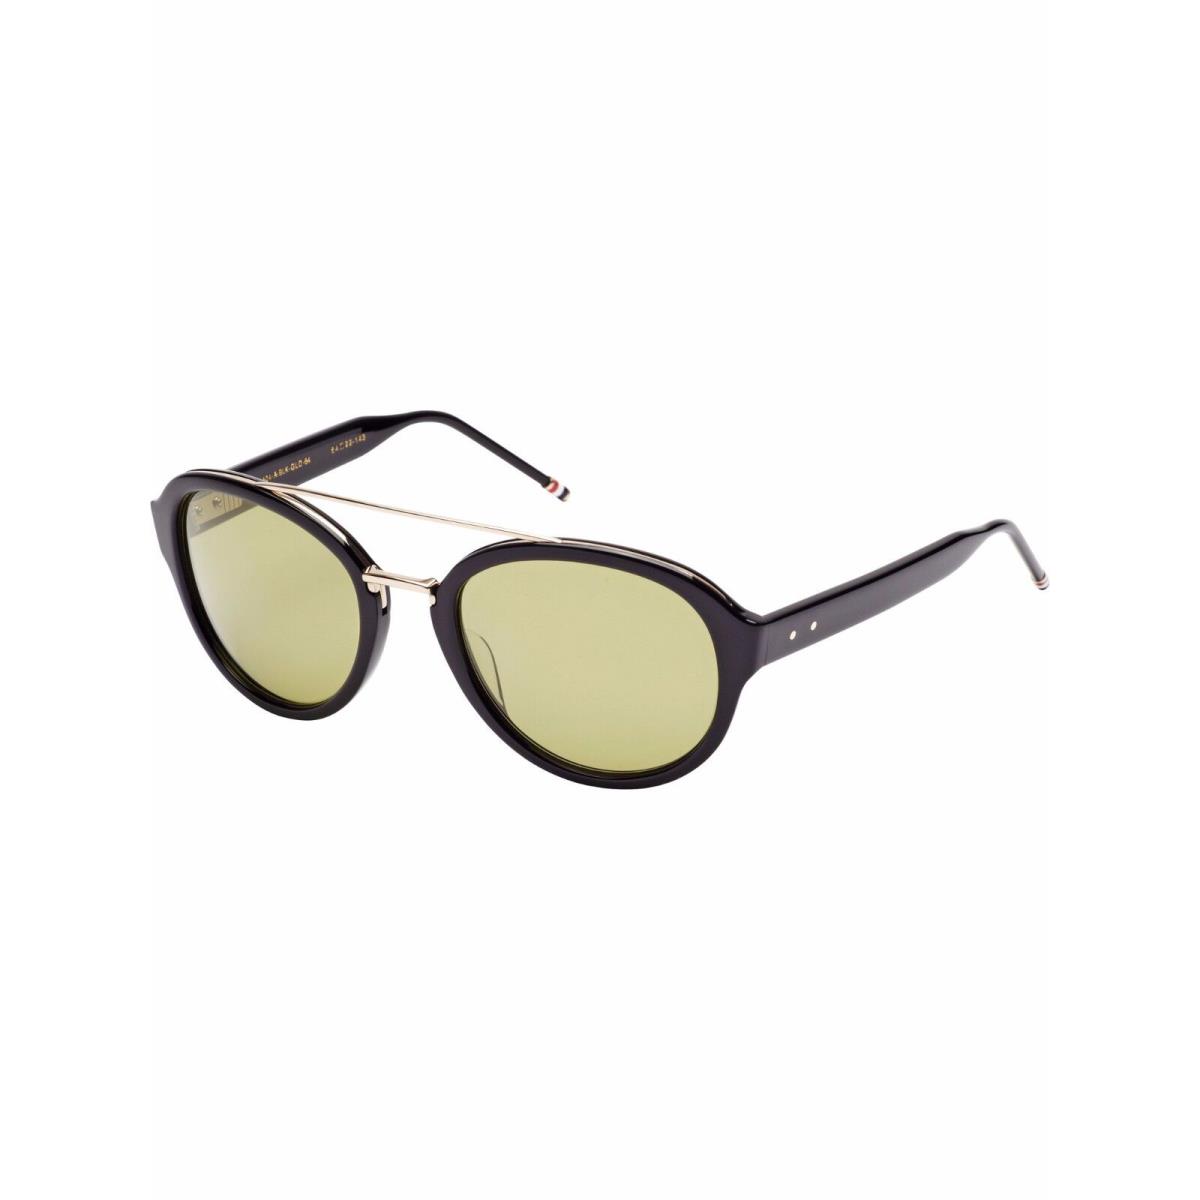 Thom Browne sunglasses  - BLACK GOLD Frame, Gray Lens